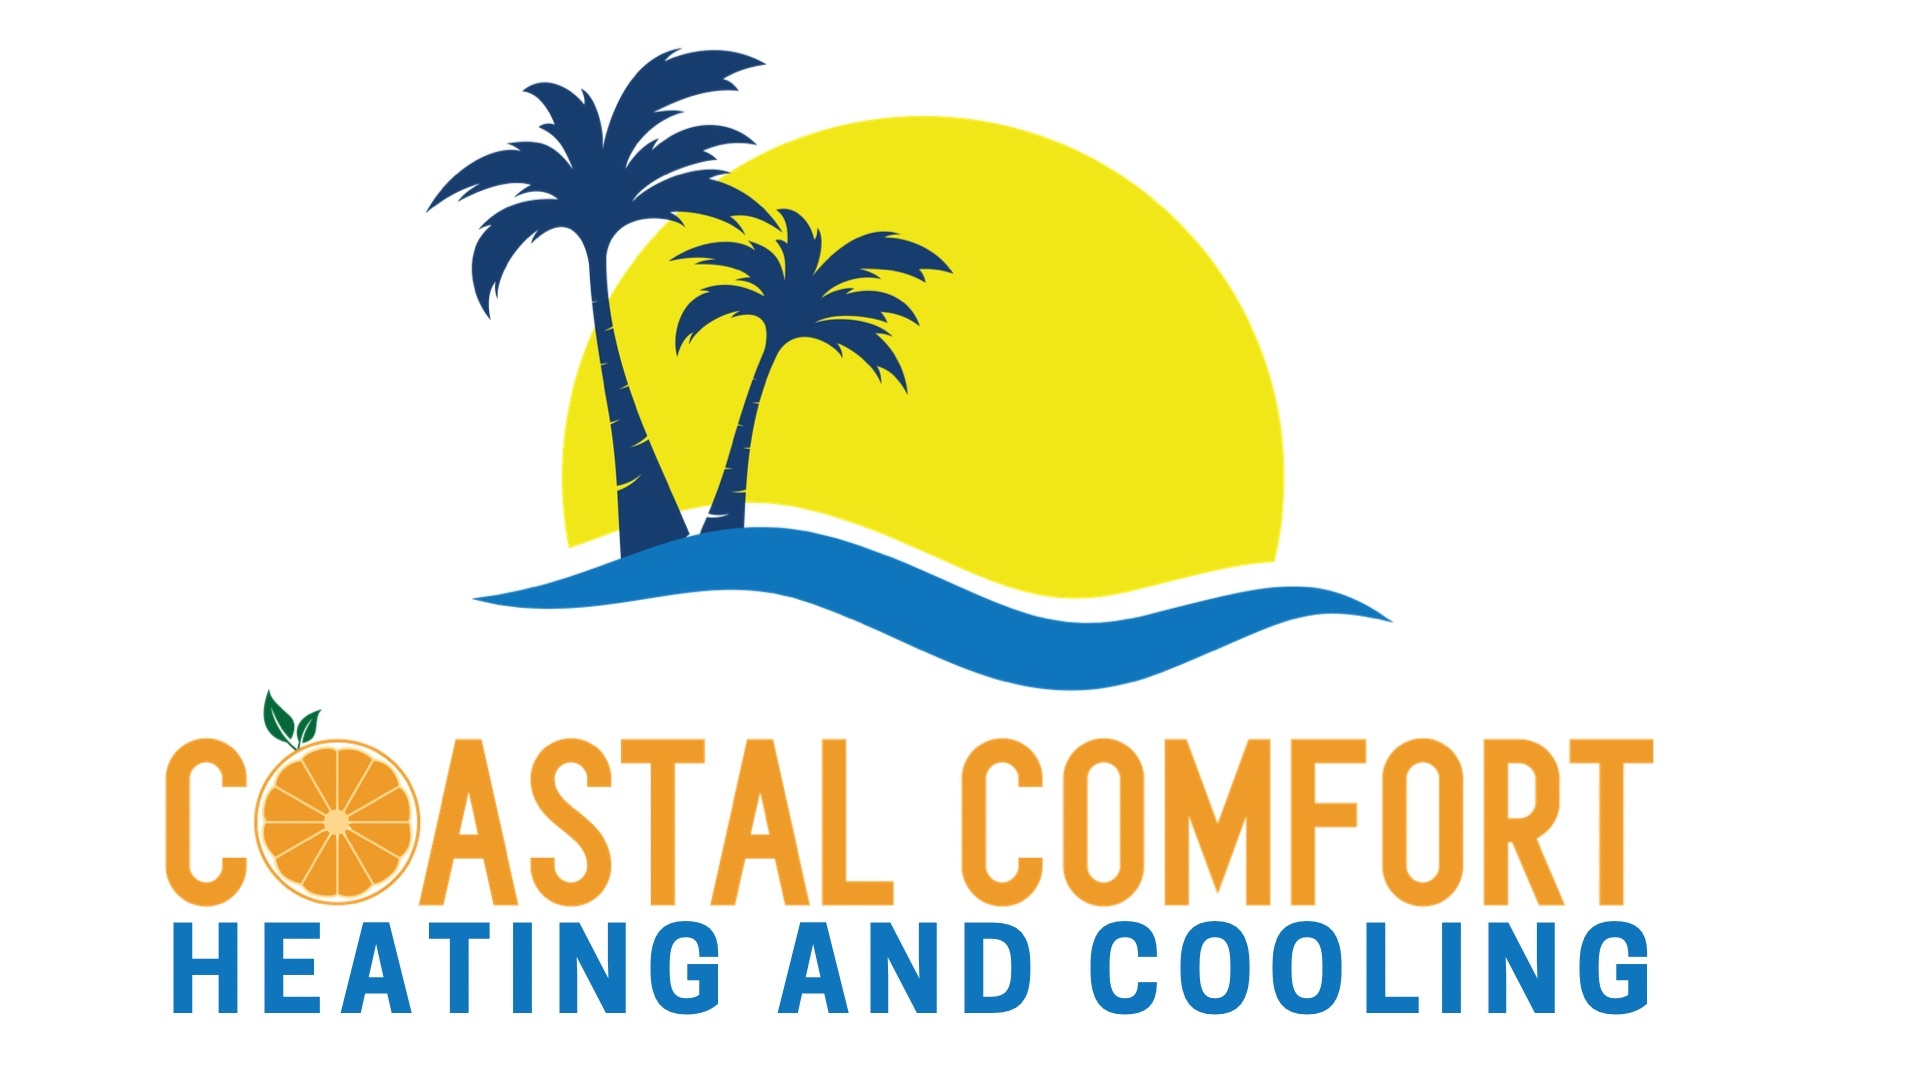 Coastal Comfort Heating and Cooling logo